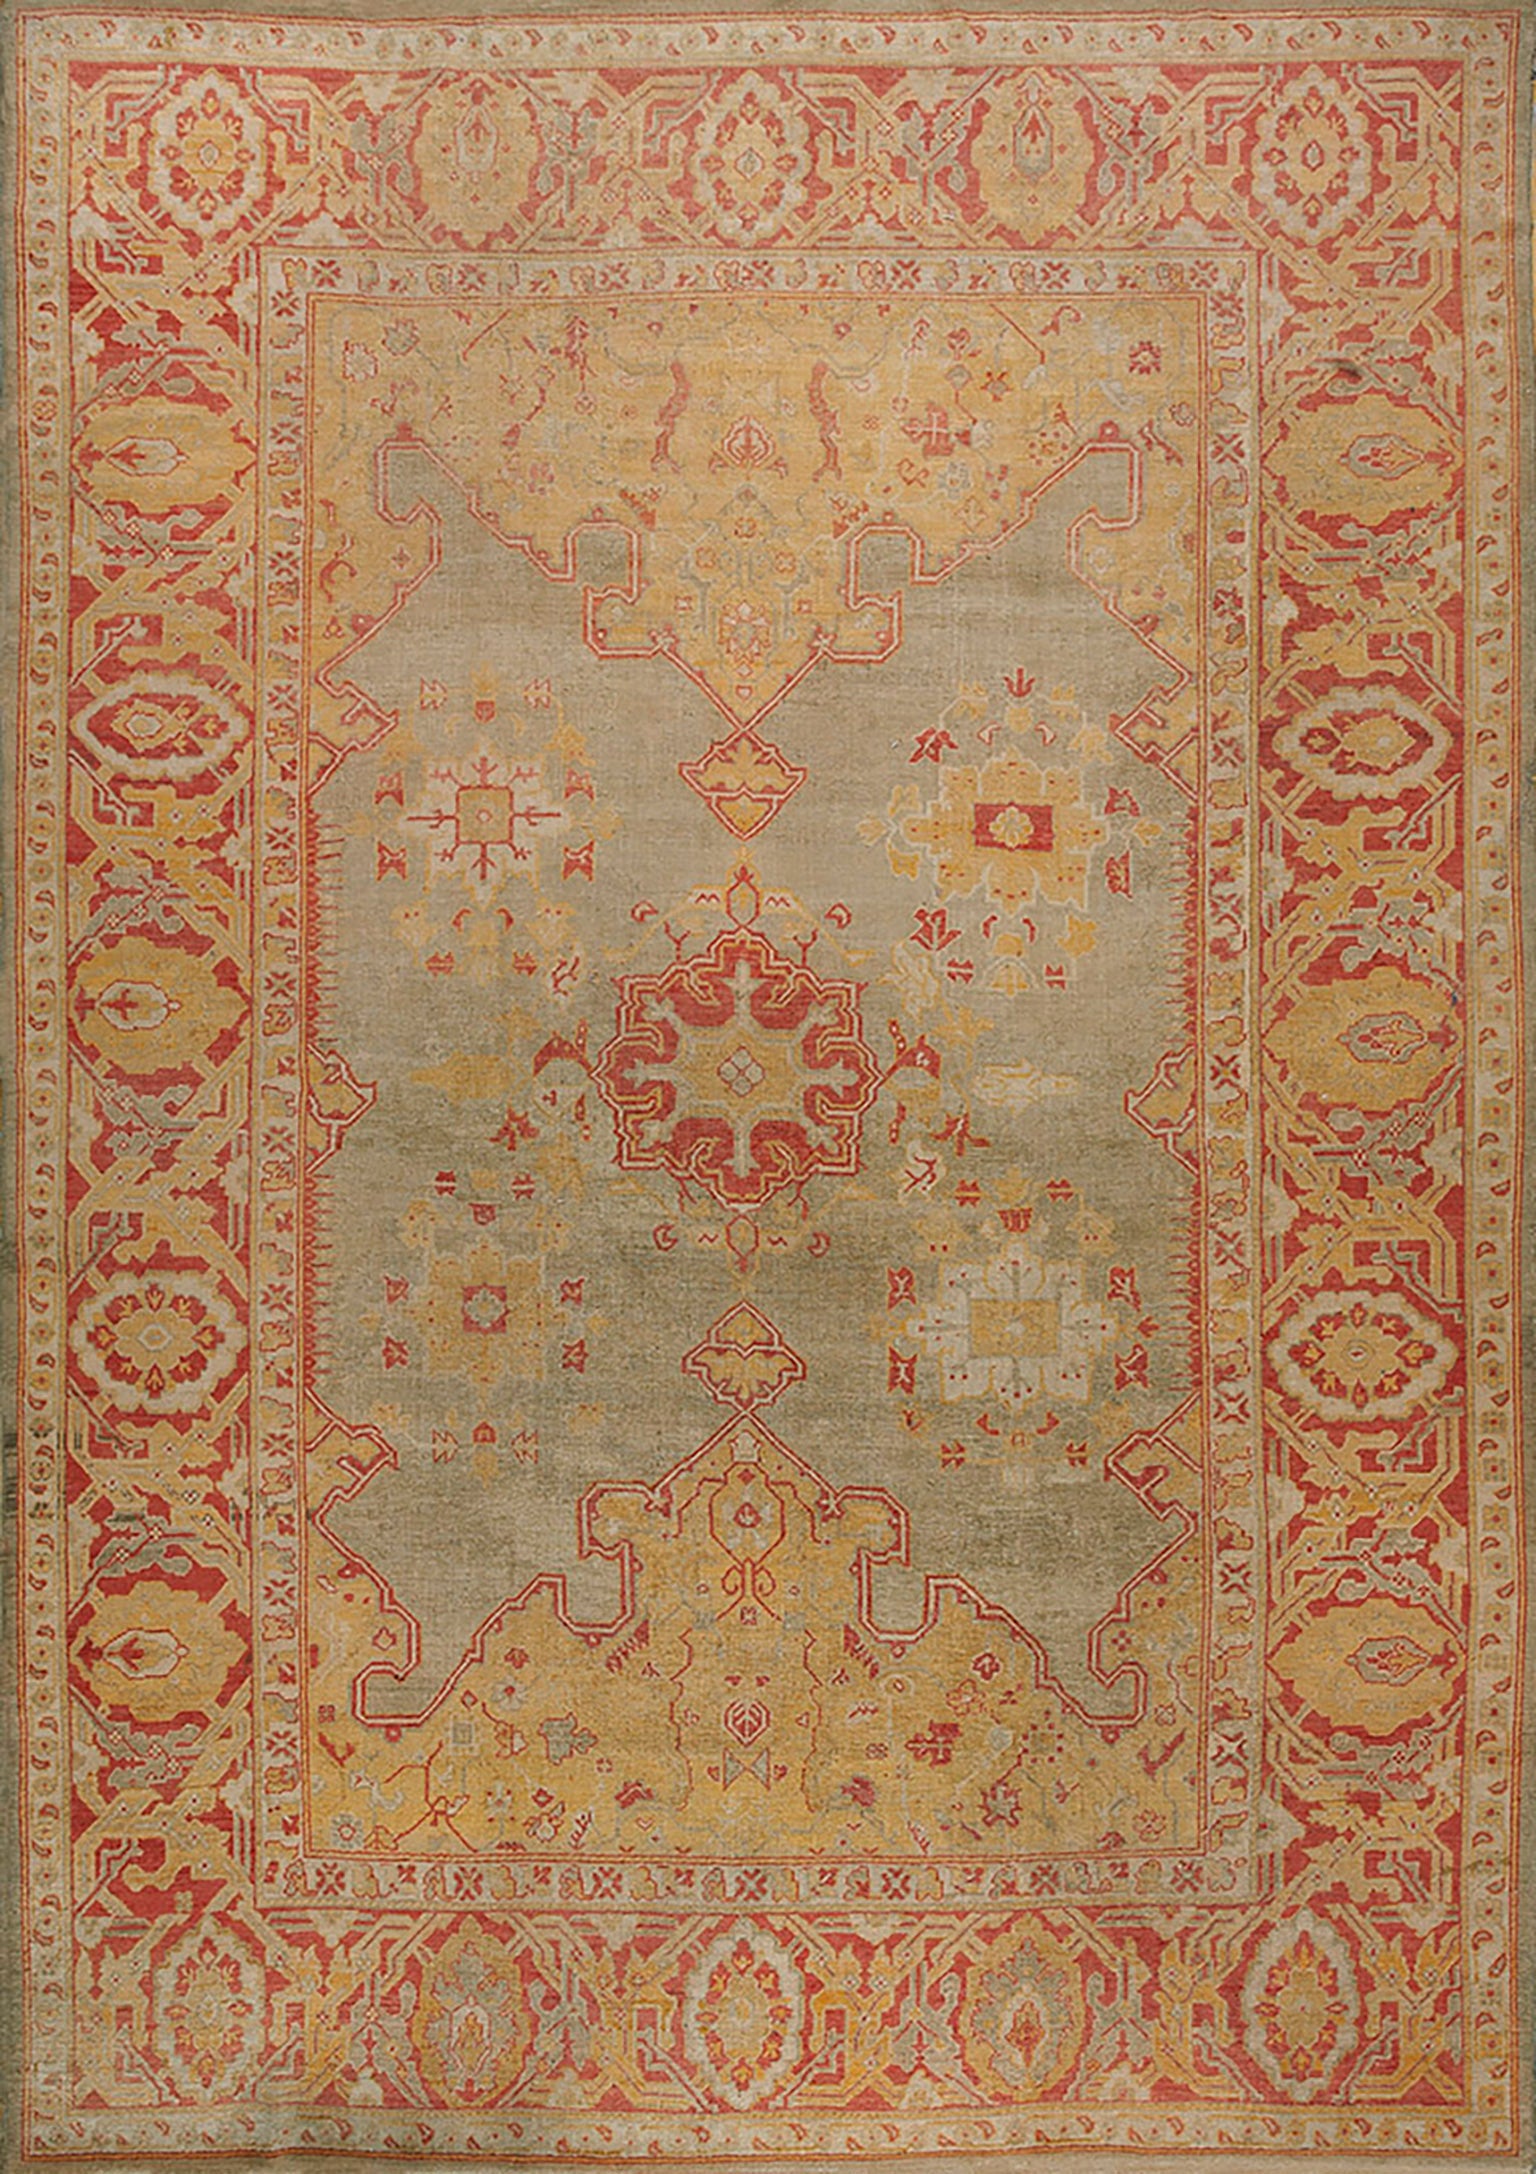 19th Century Turkish Oushak Carpet ( 10' x 13'6" - 305 x 412 )